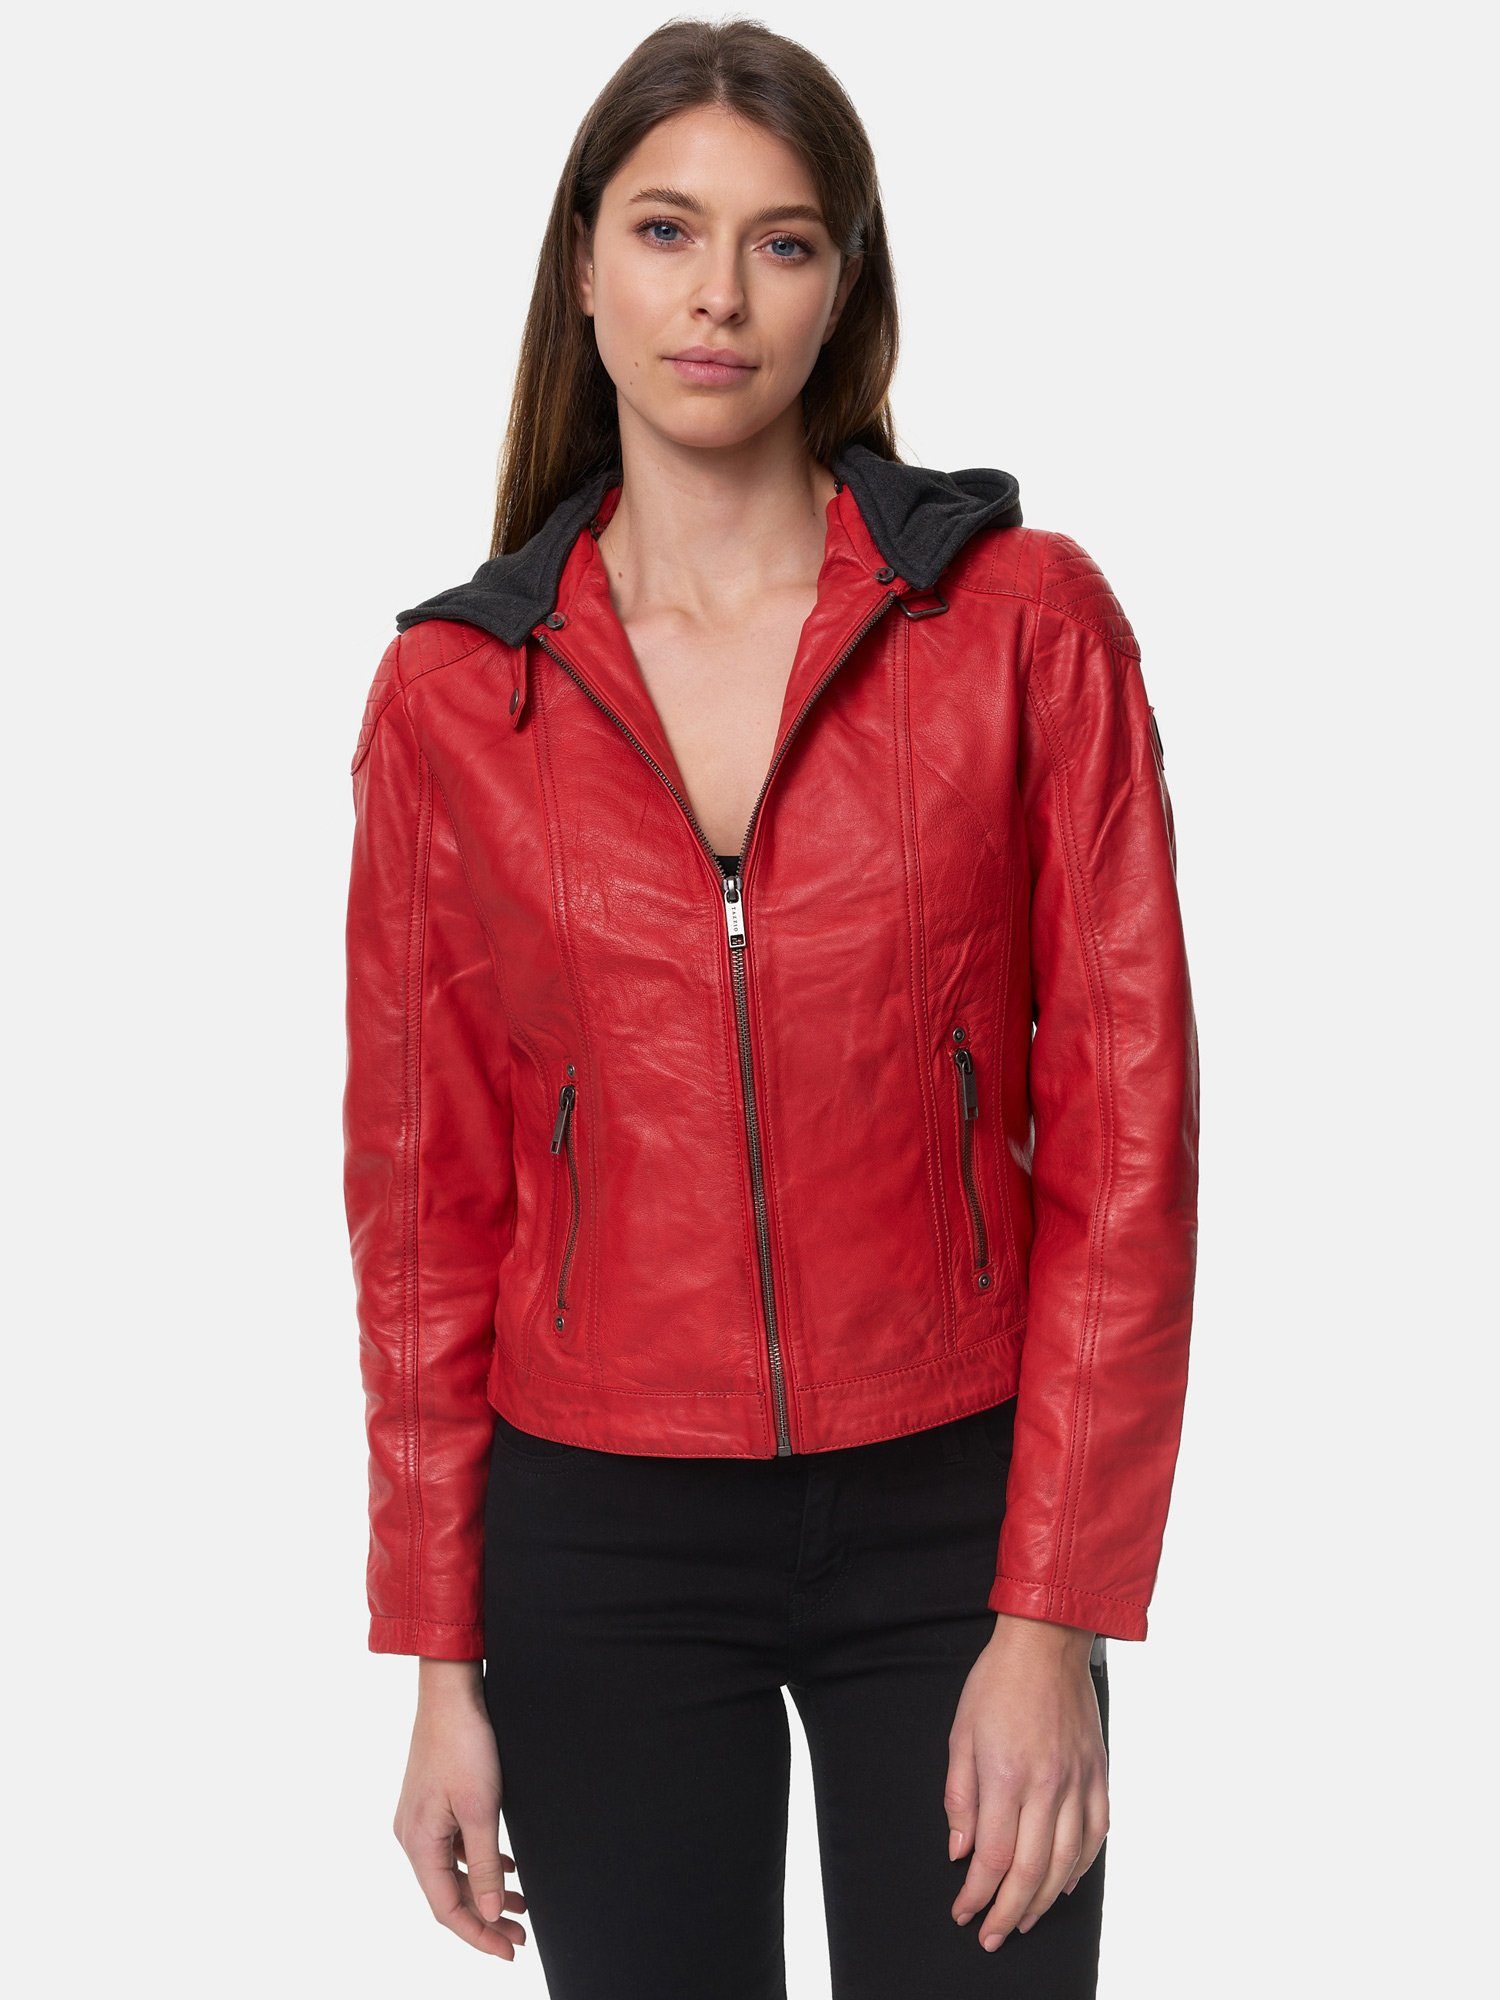 Tazzio Lederjacke F503 Damen Leder Jacke im Biker Look mit abnehmbarer Kapuze rot